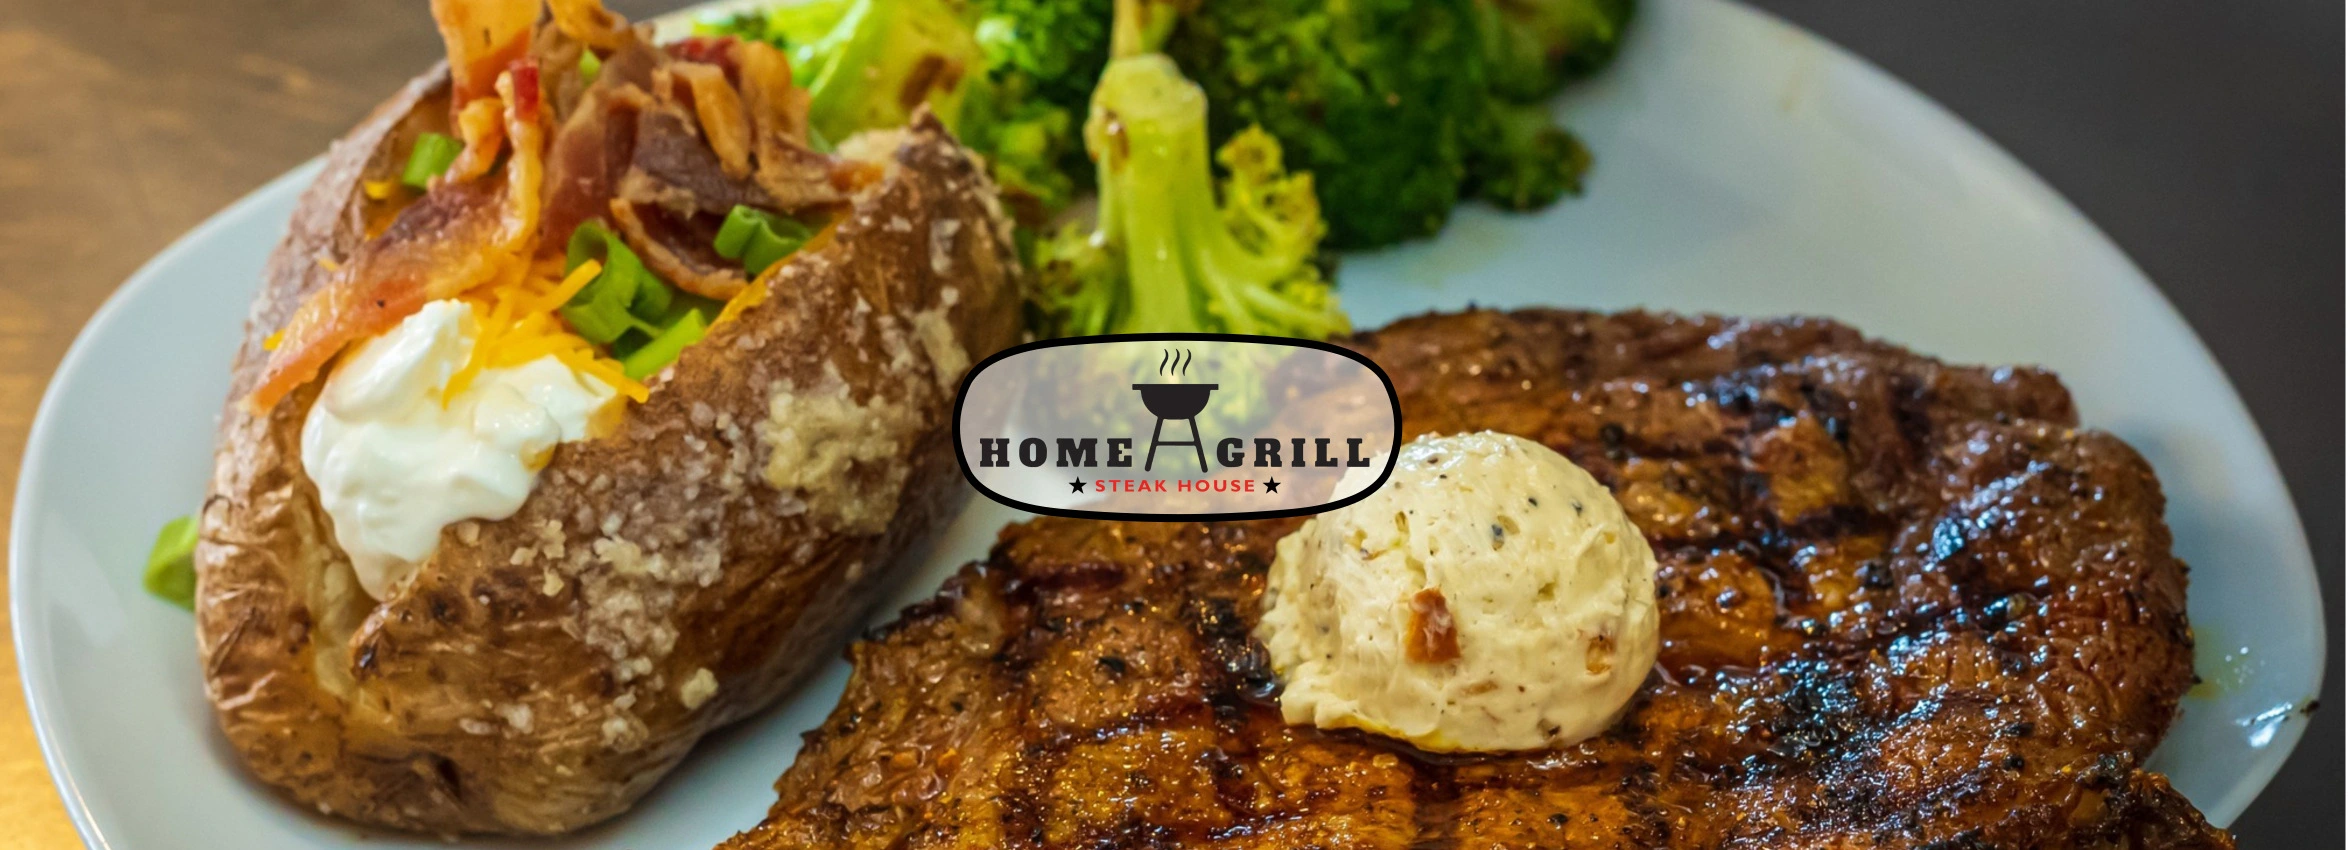 Home-Grill-Steak-House_DEsktop_ET